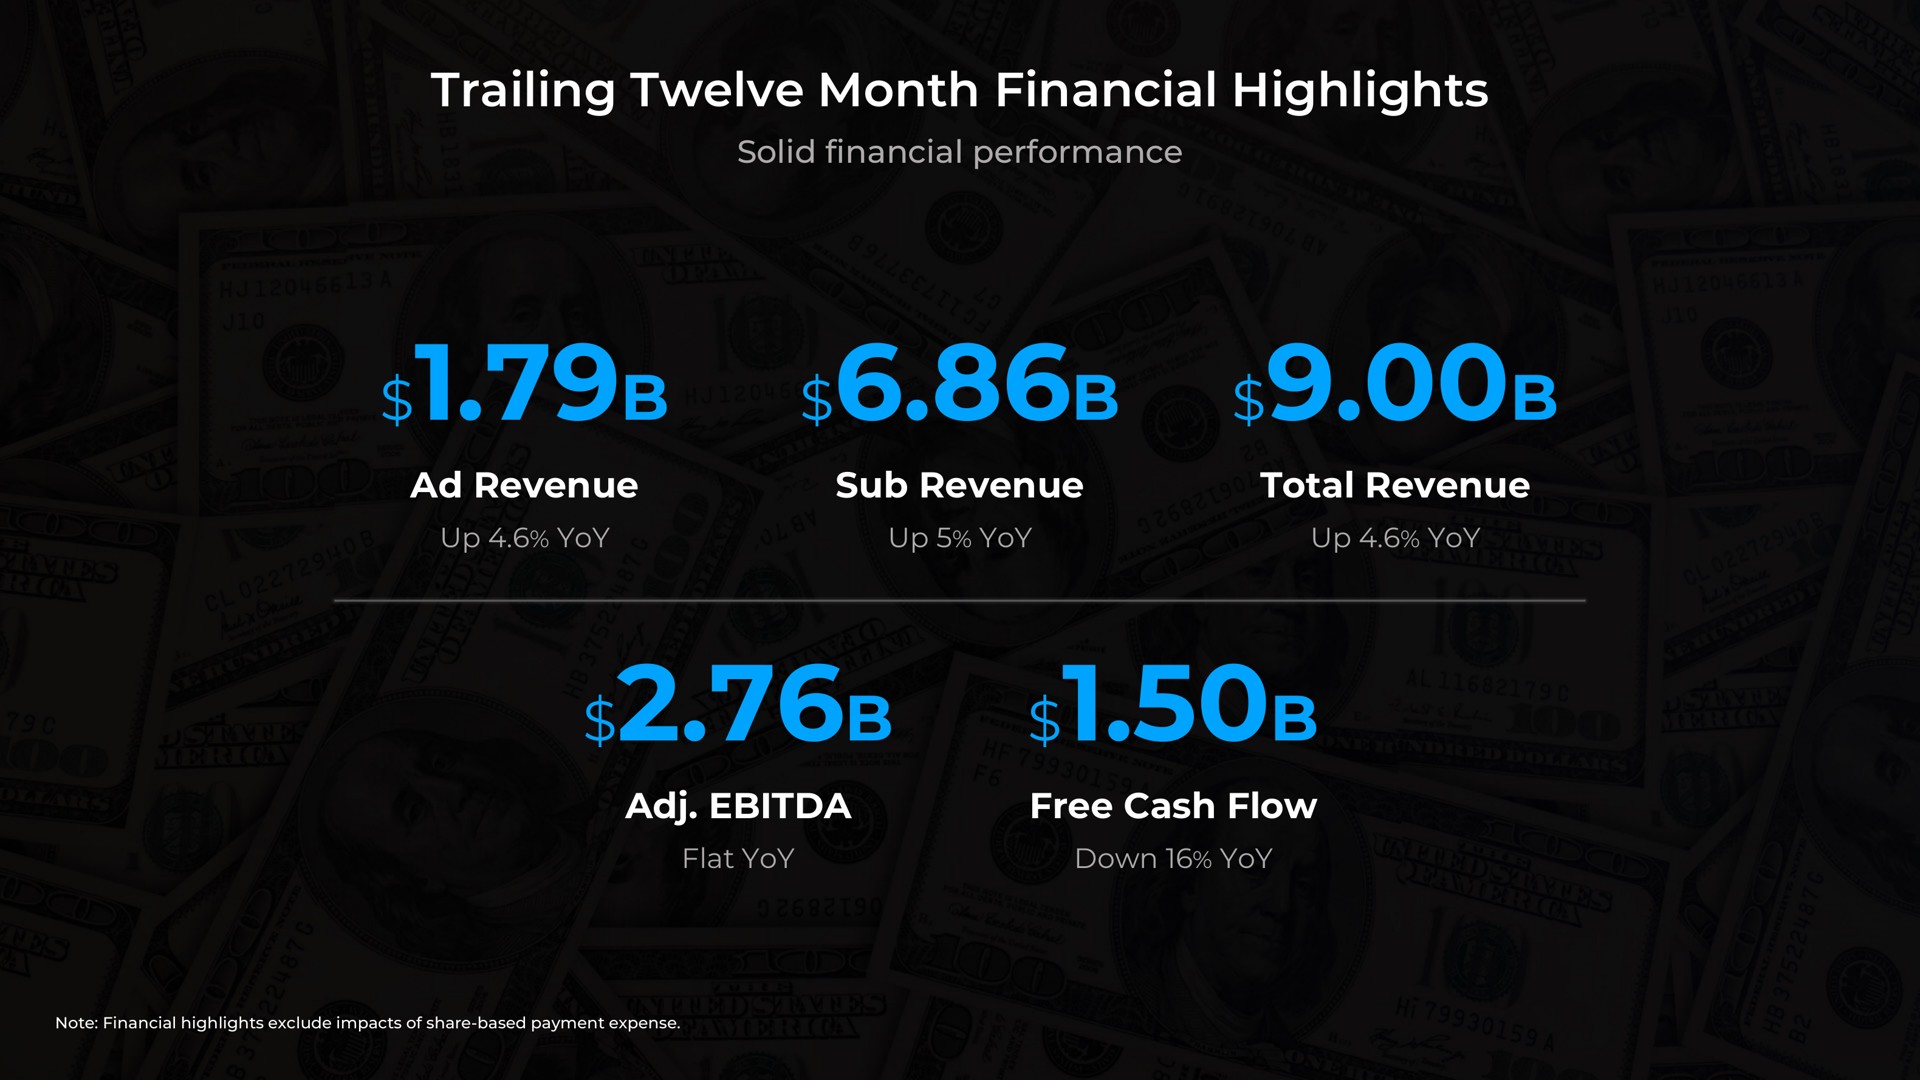 trailing twelve month financial highlights free cash flow | SiriusXM